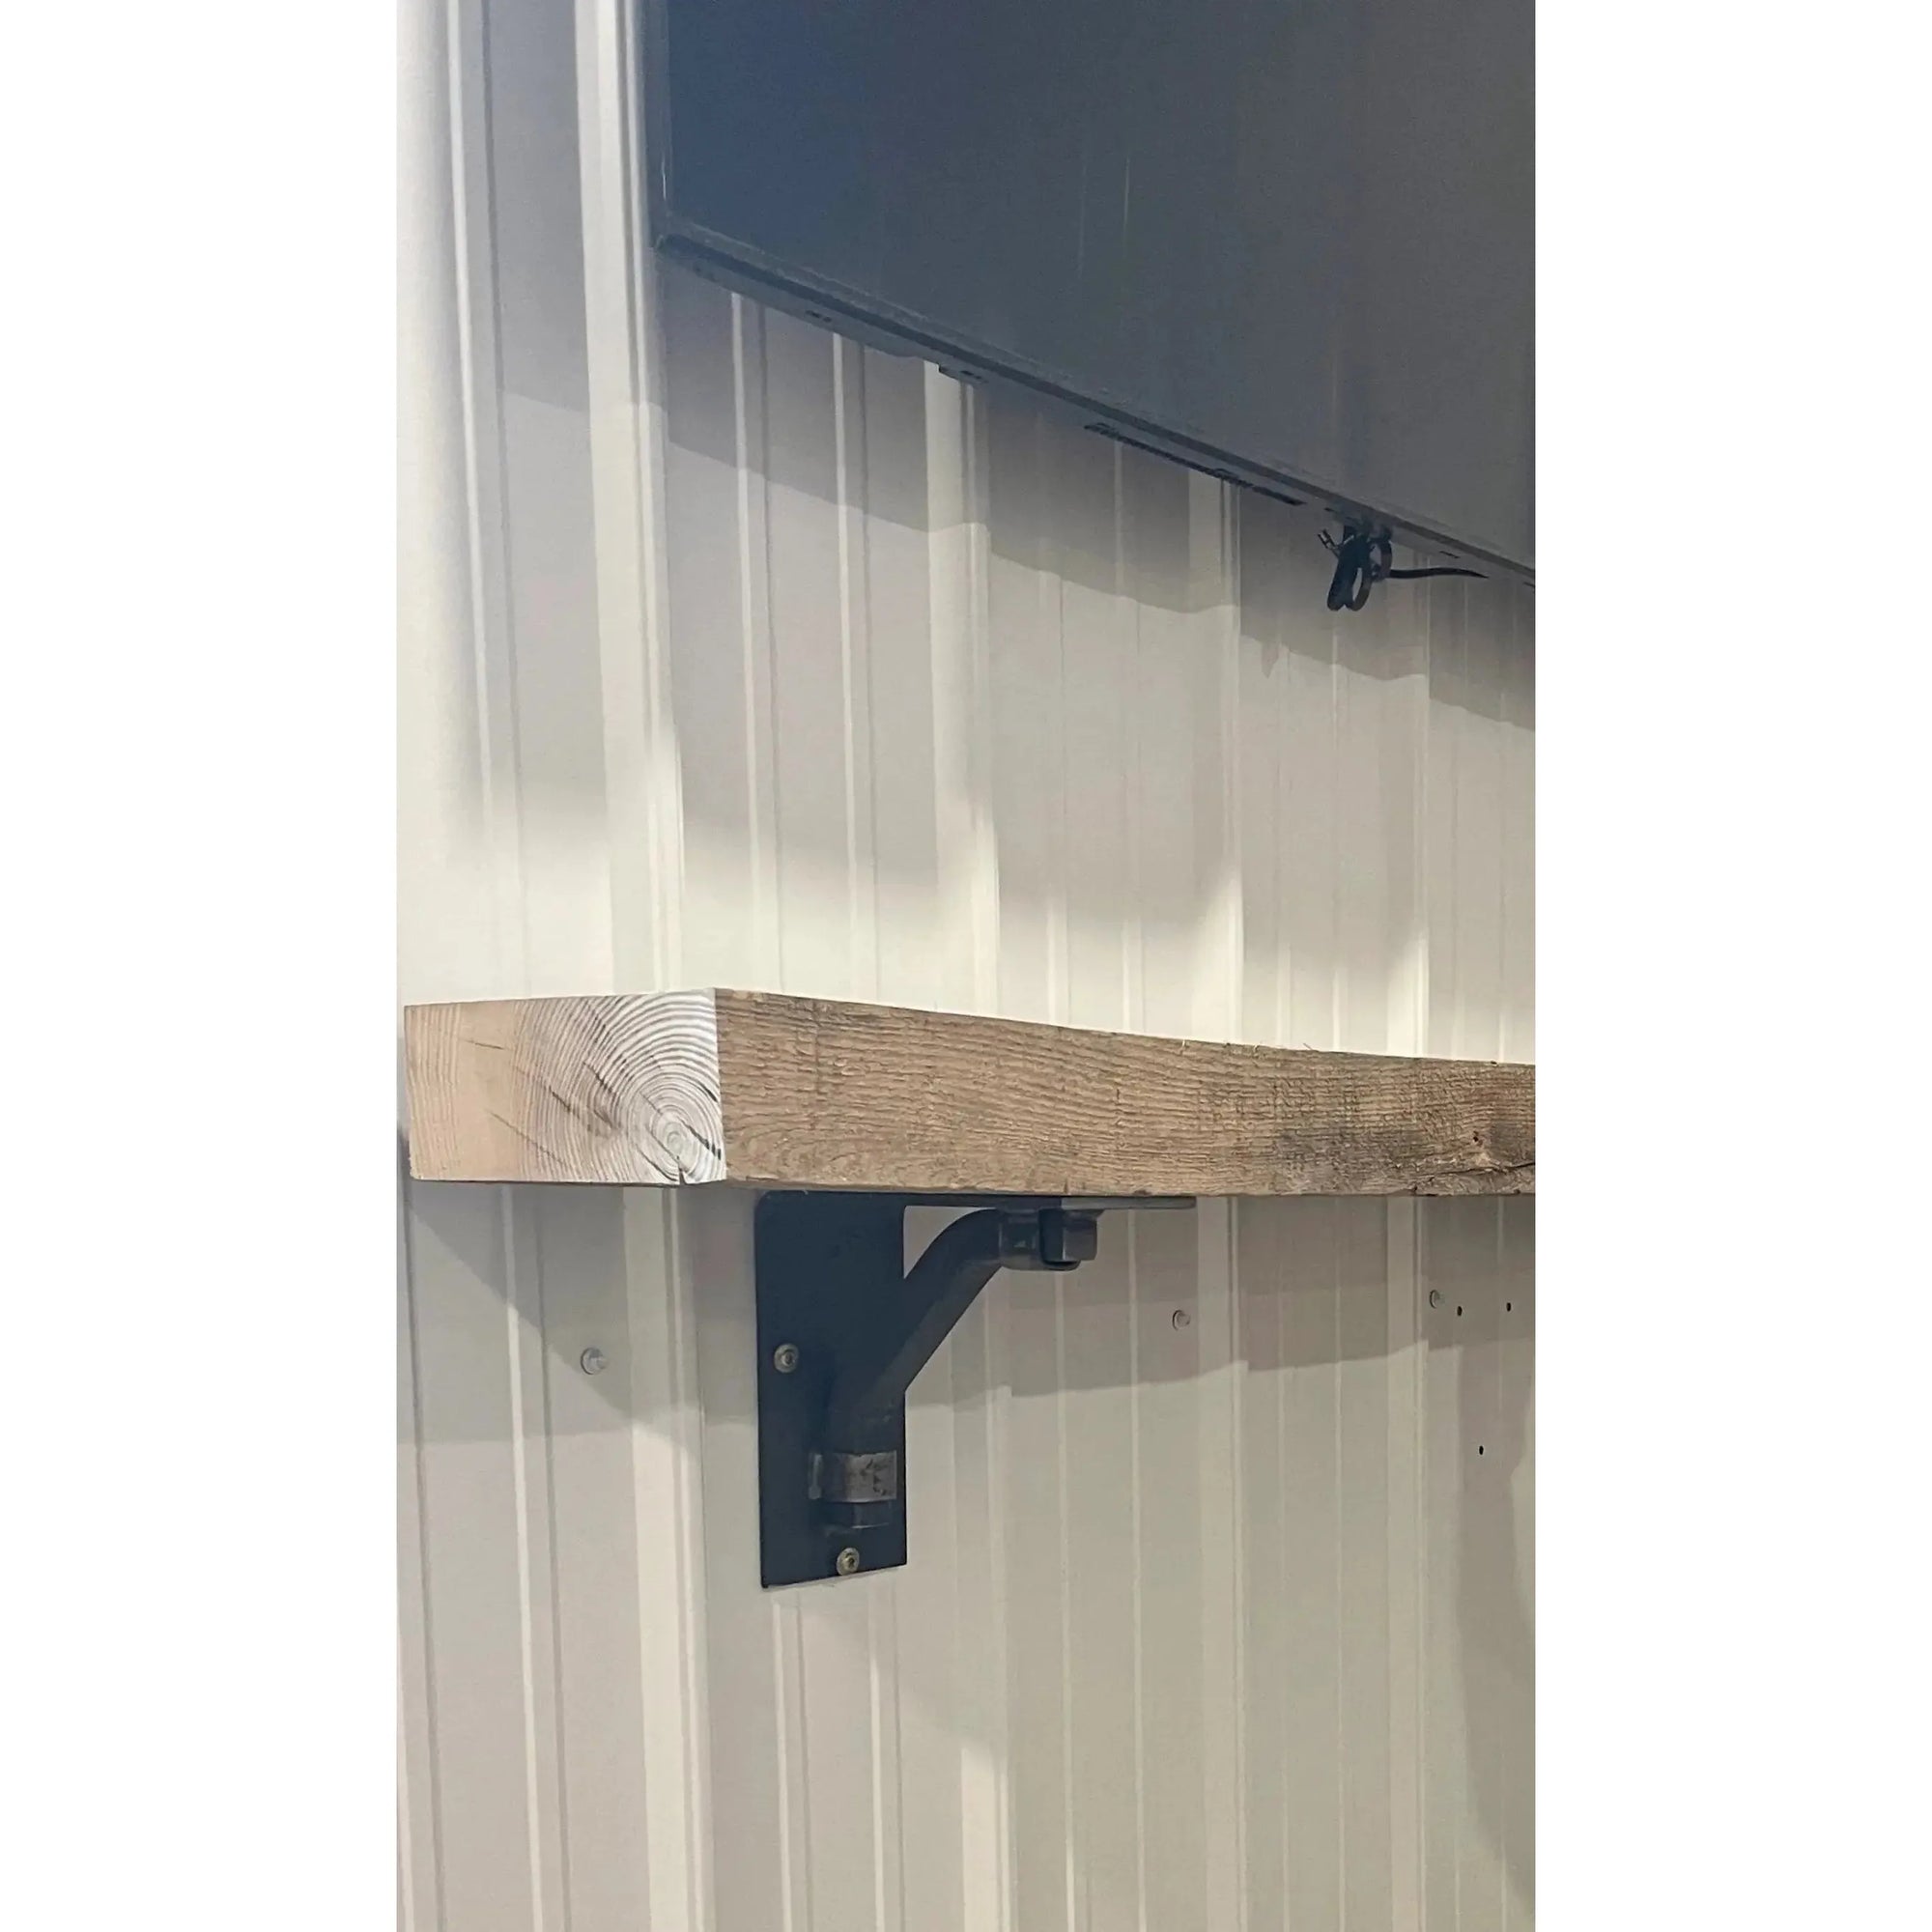 The Rosamond Shelf Supports Shelf Support 5" Depth x 5" Wall Mount Length Finish Silver Powder Coat | Industrial Farm Co